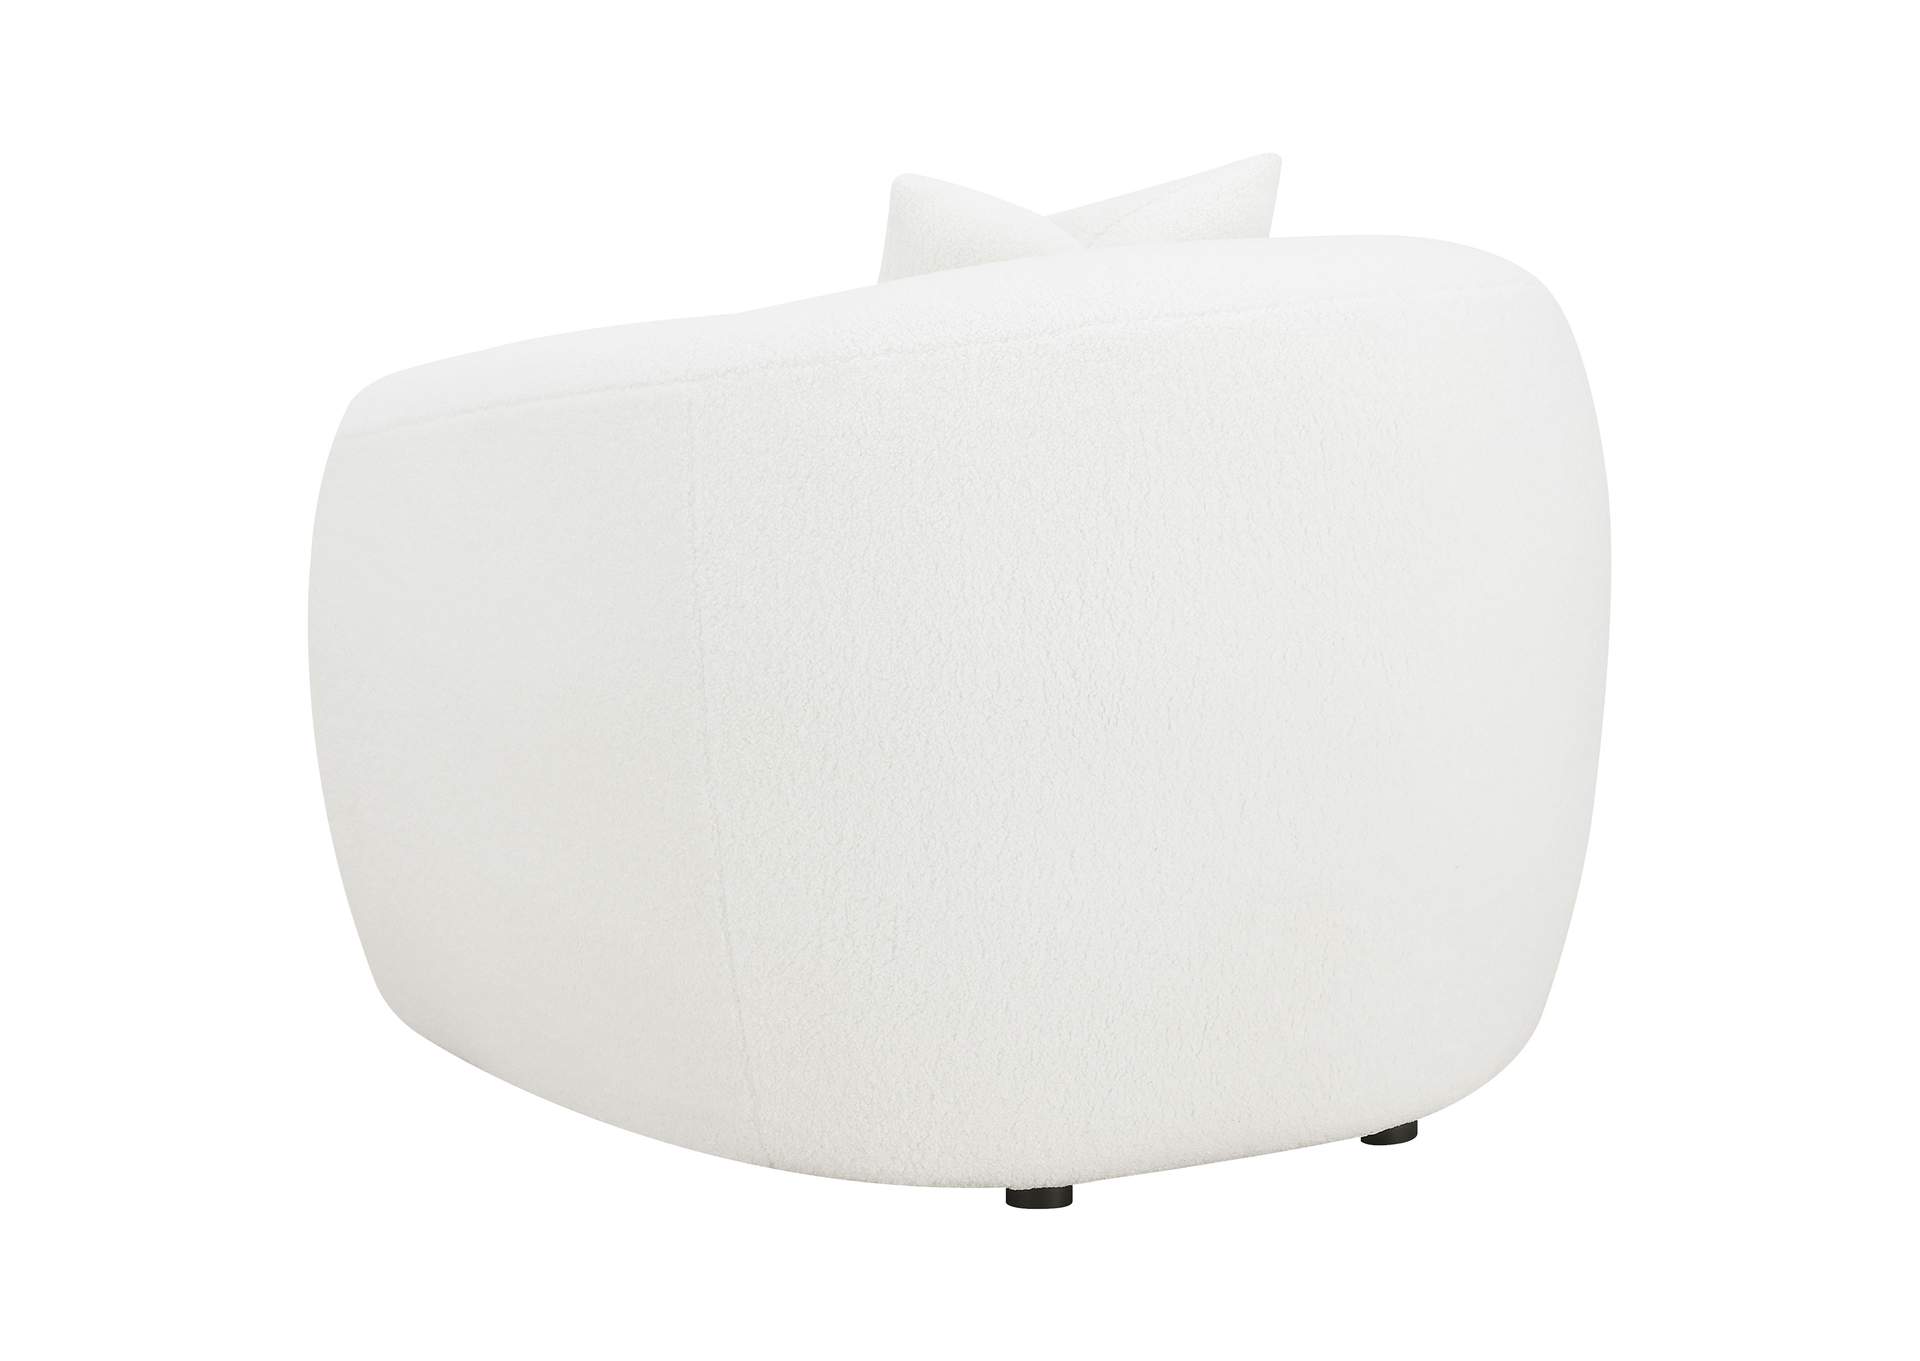 Isabella 3-piece Upholstered Tight Back Living Room Set White,Coaster Furniture